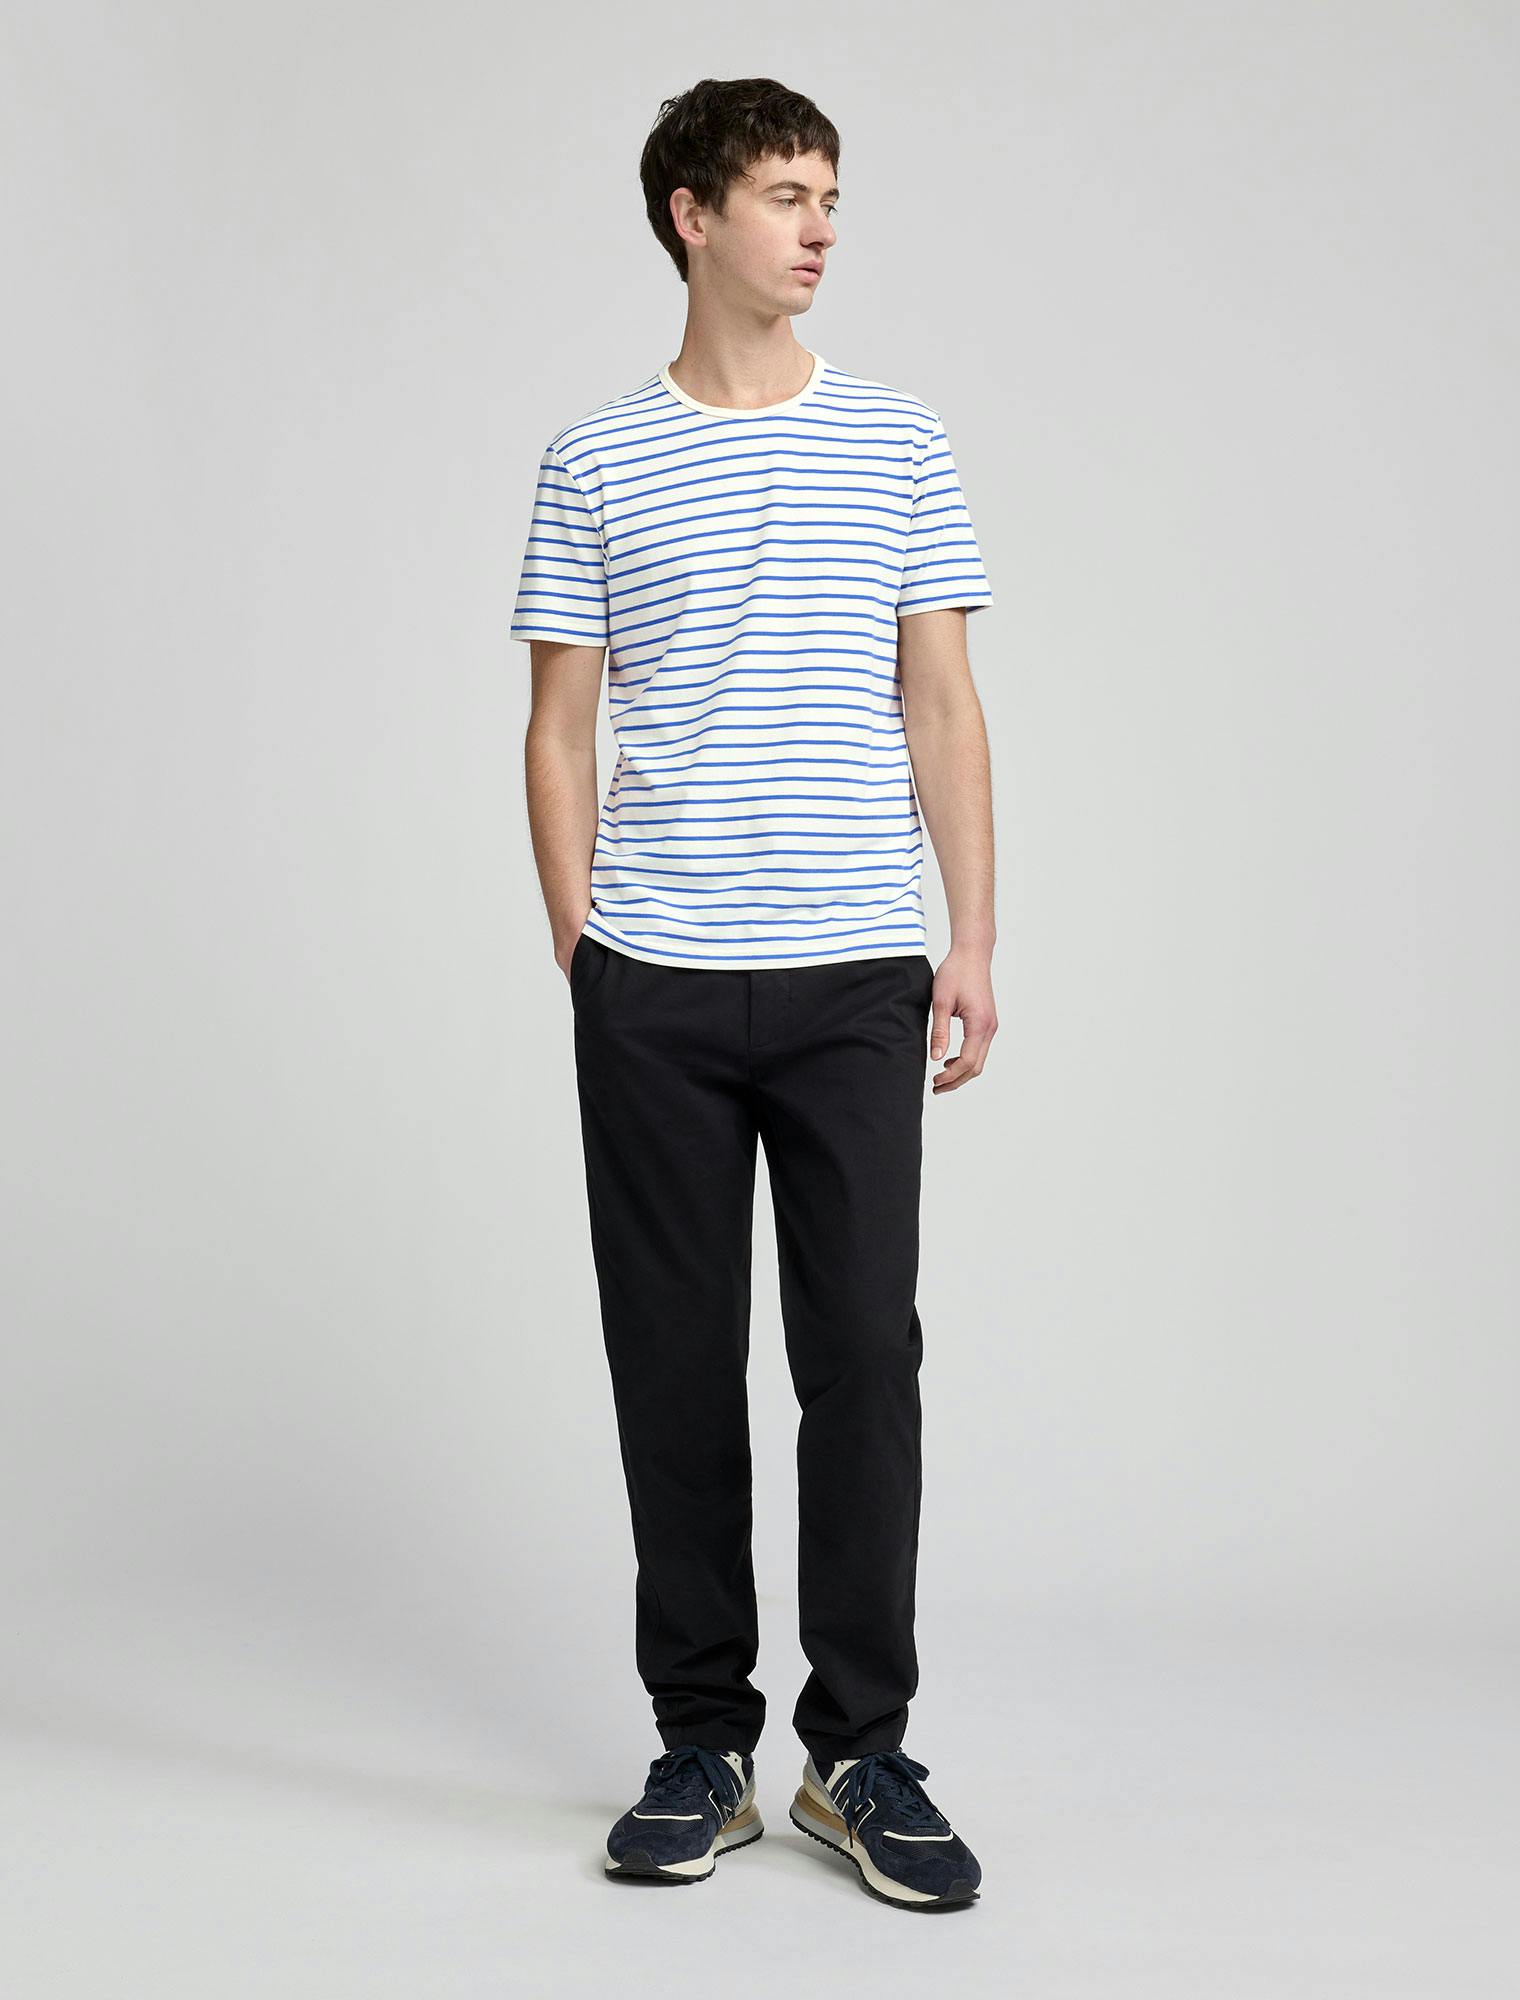 Men's Riviera Striped T-Shirt - Cream & Royal Blue Stripe